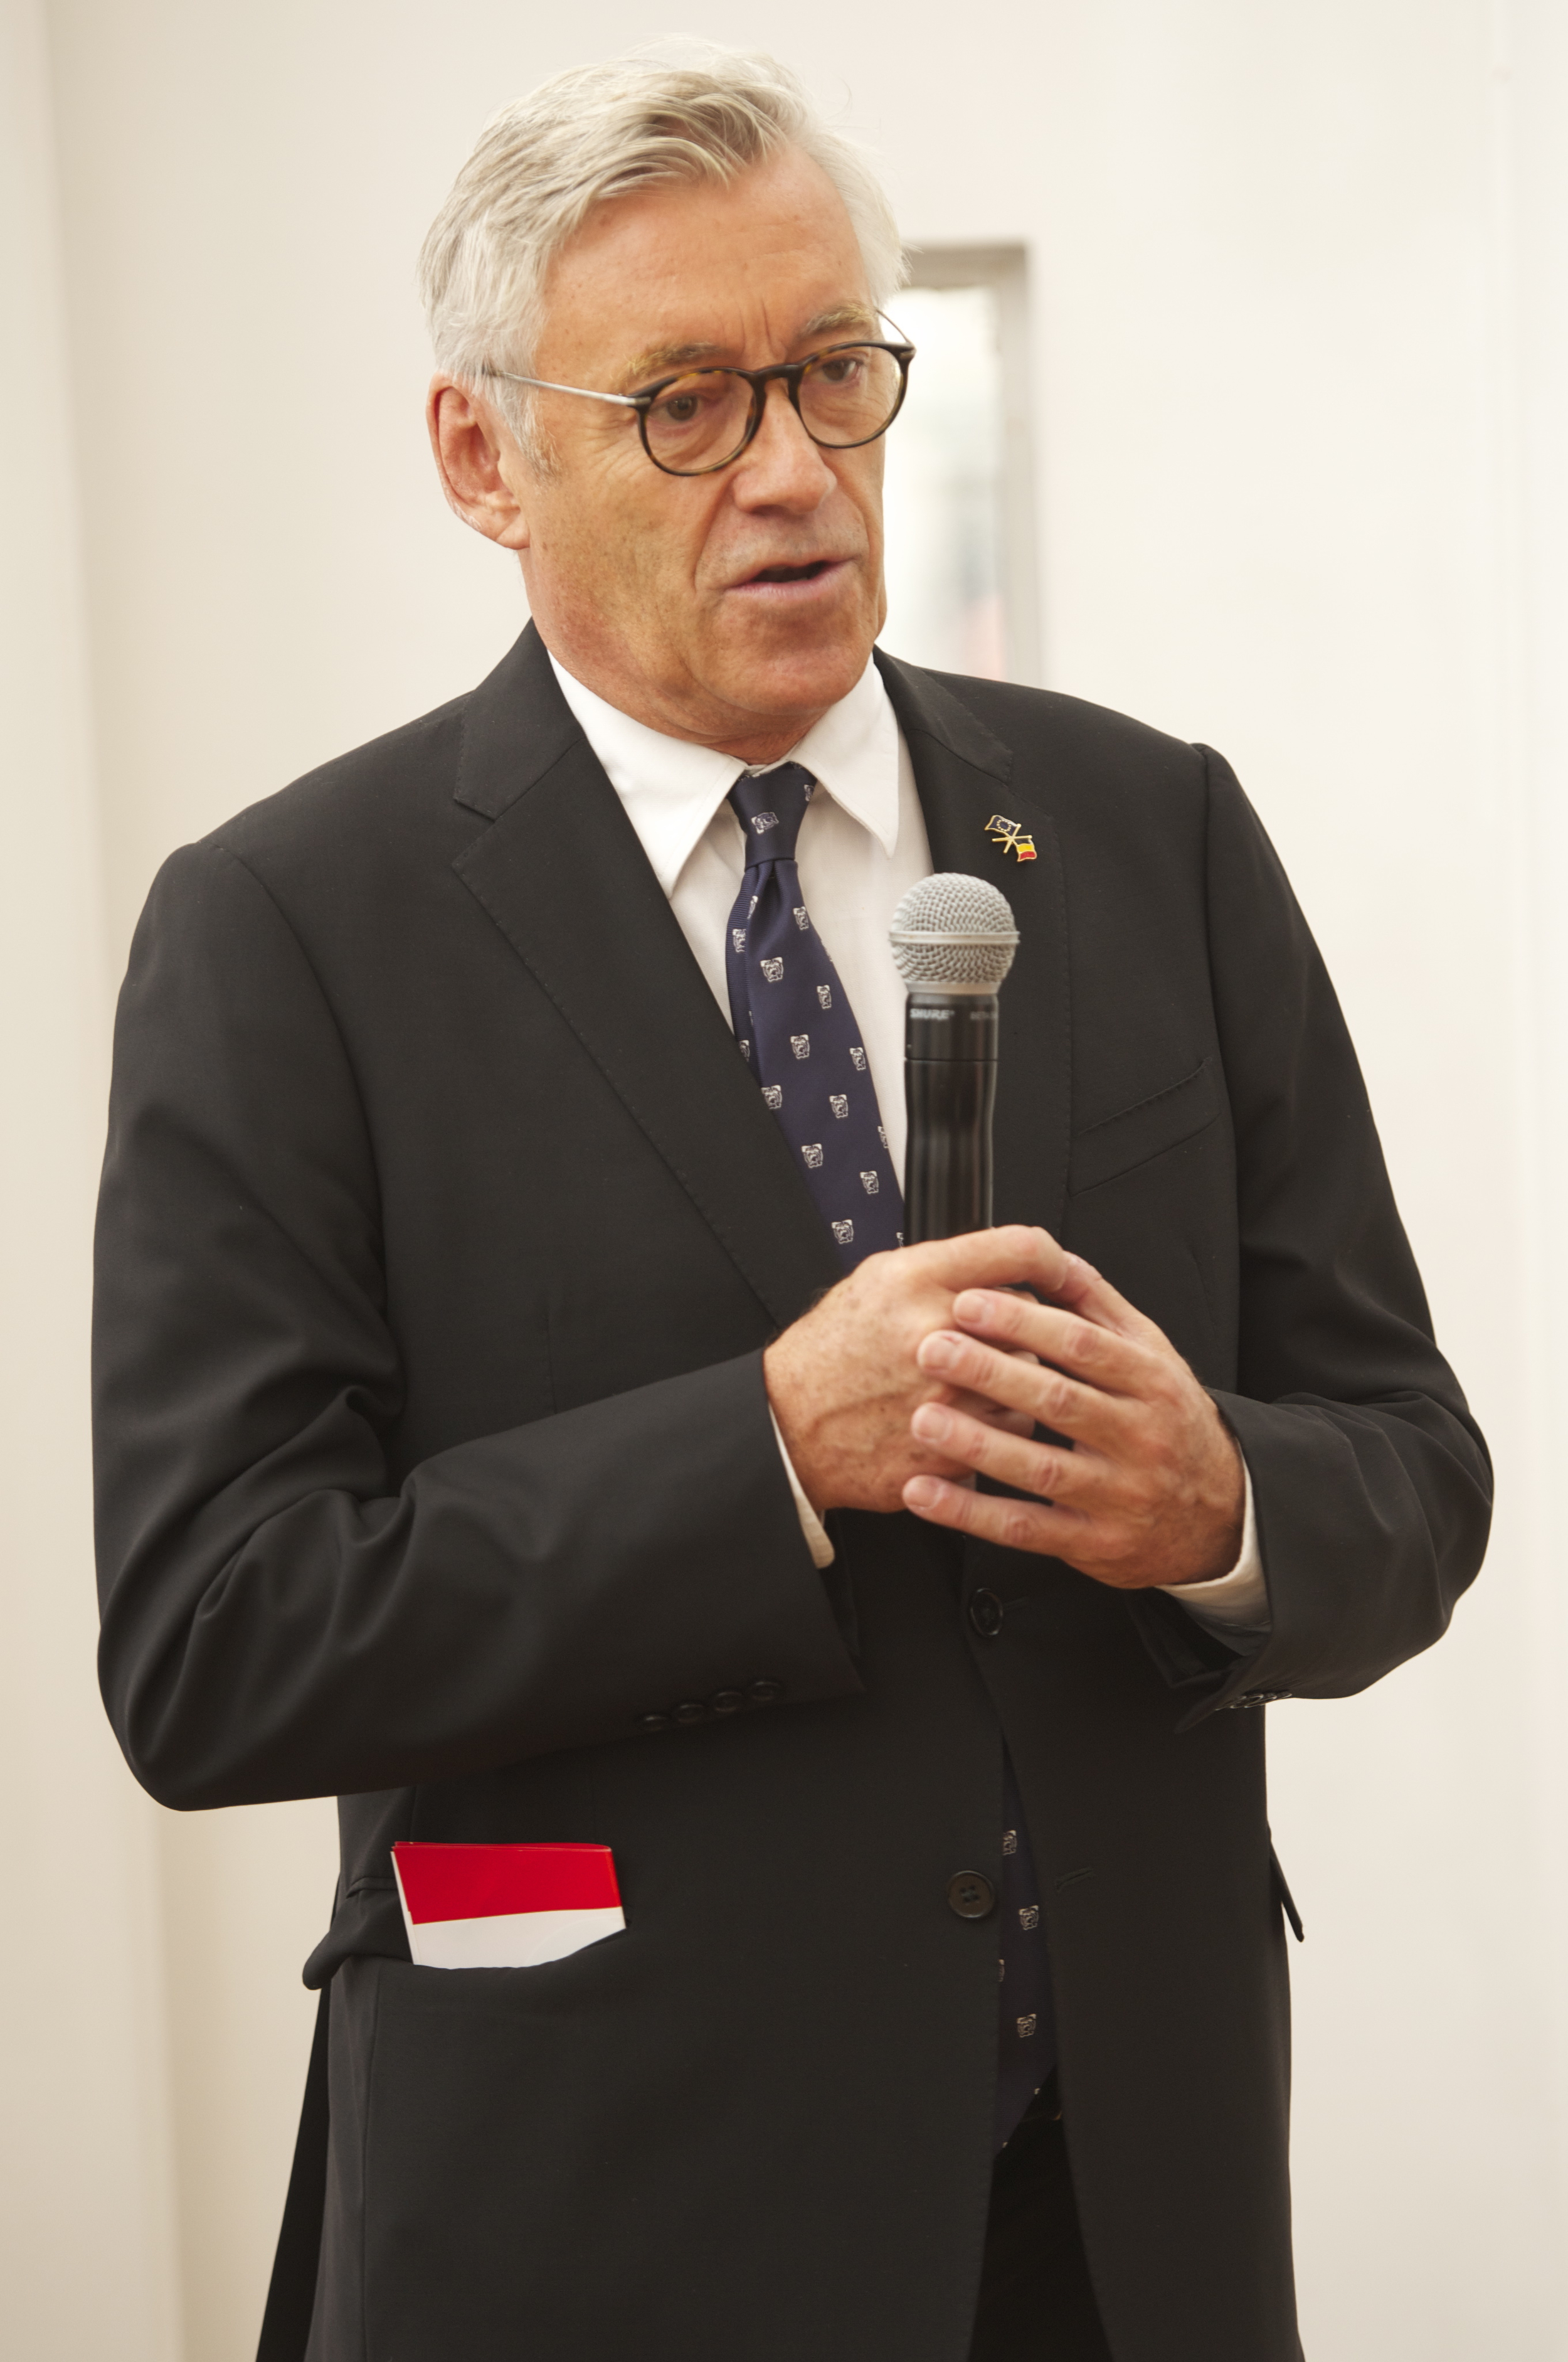  Jimmy Jamar, Head of the European Commission.&nbsp;Historic Speech debate at BOZAR.&nbsp;Photo ©Yves Gervais 